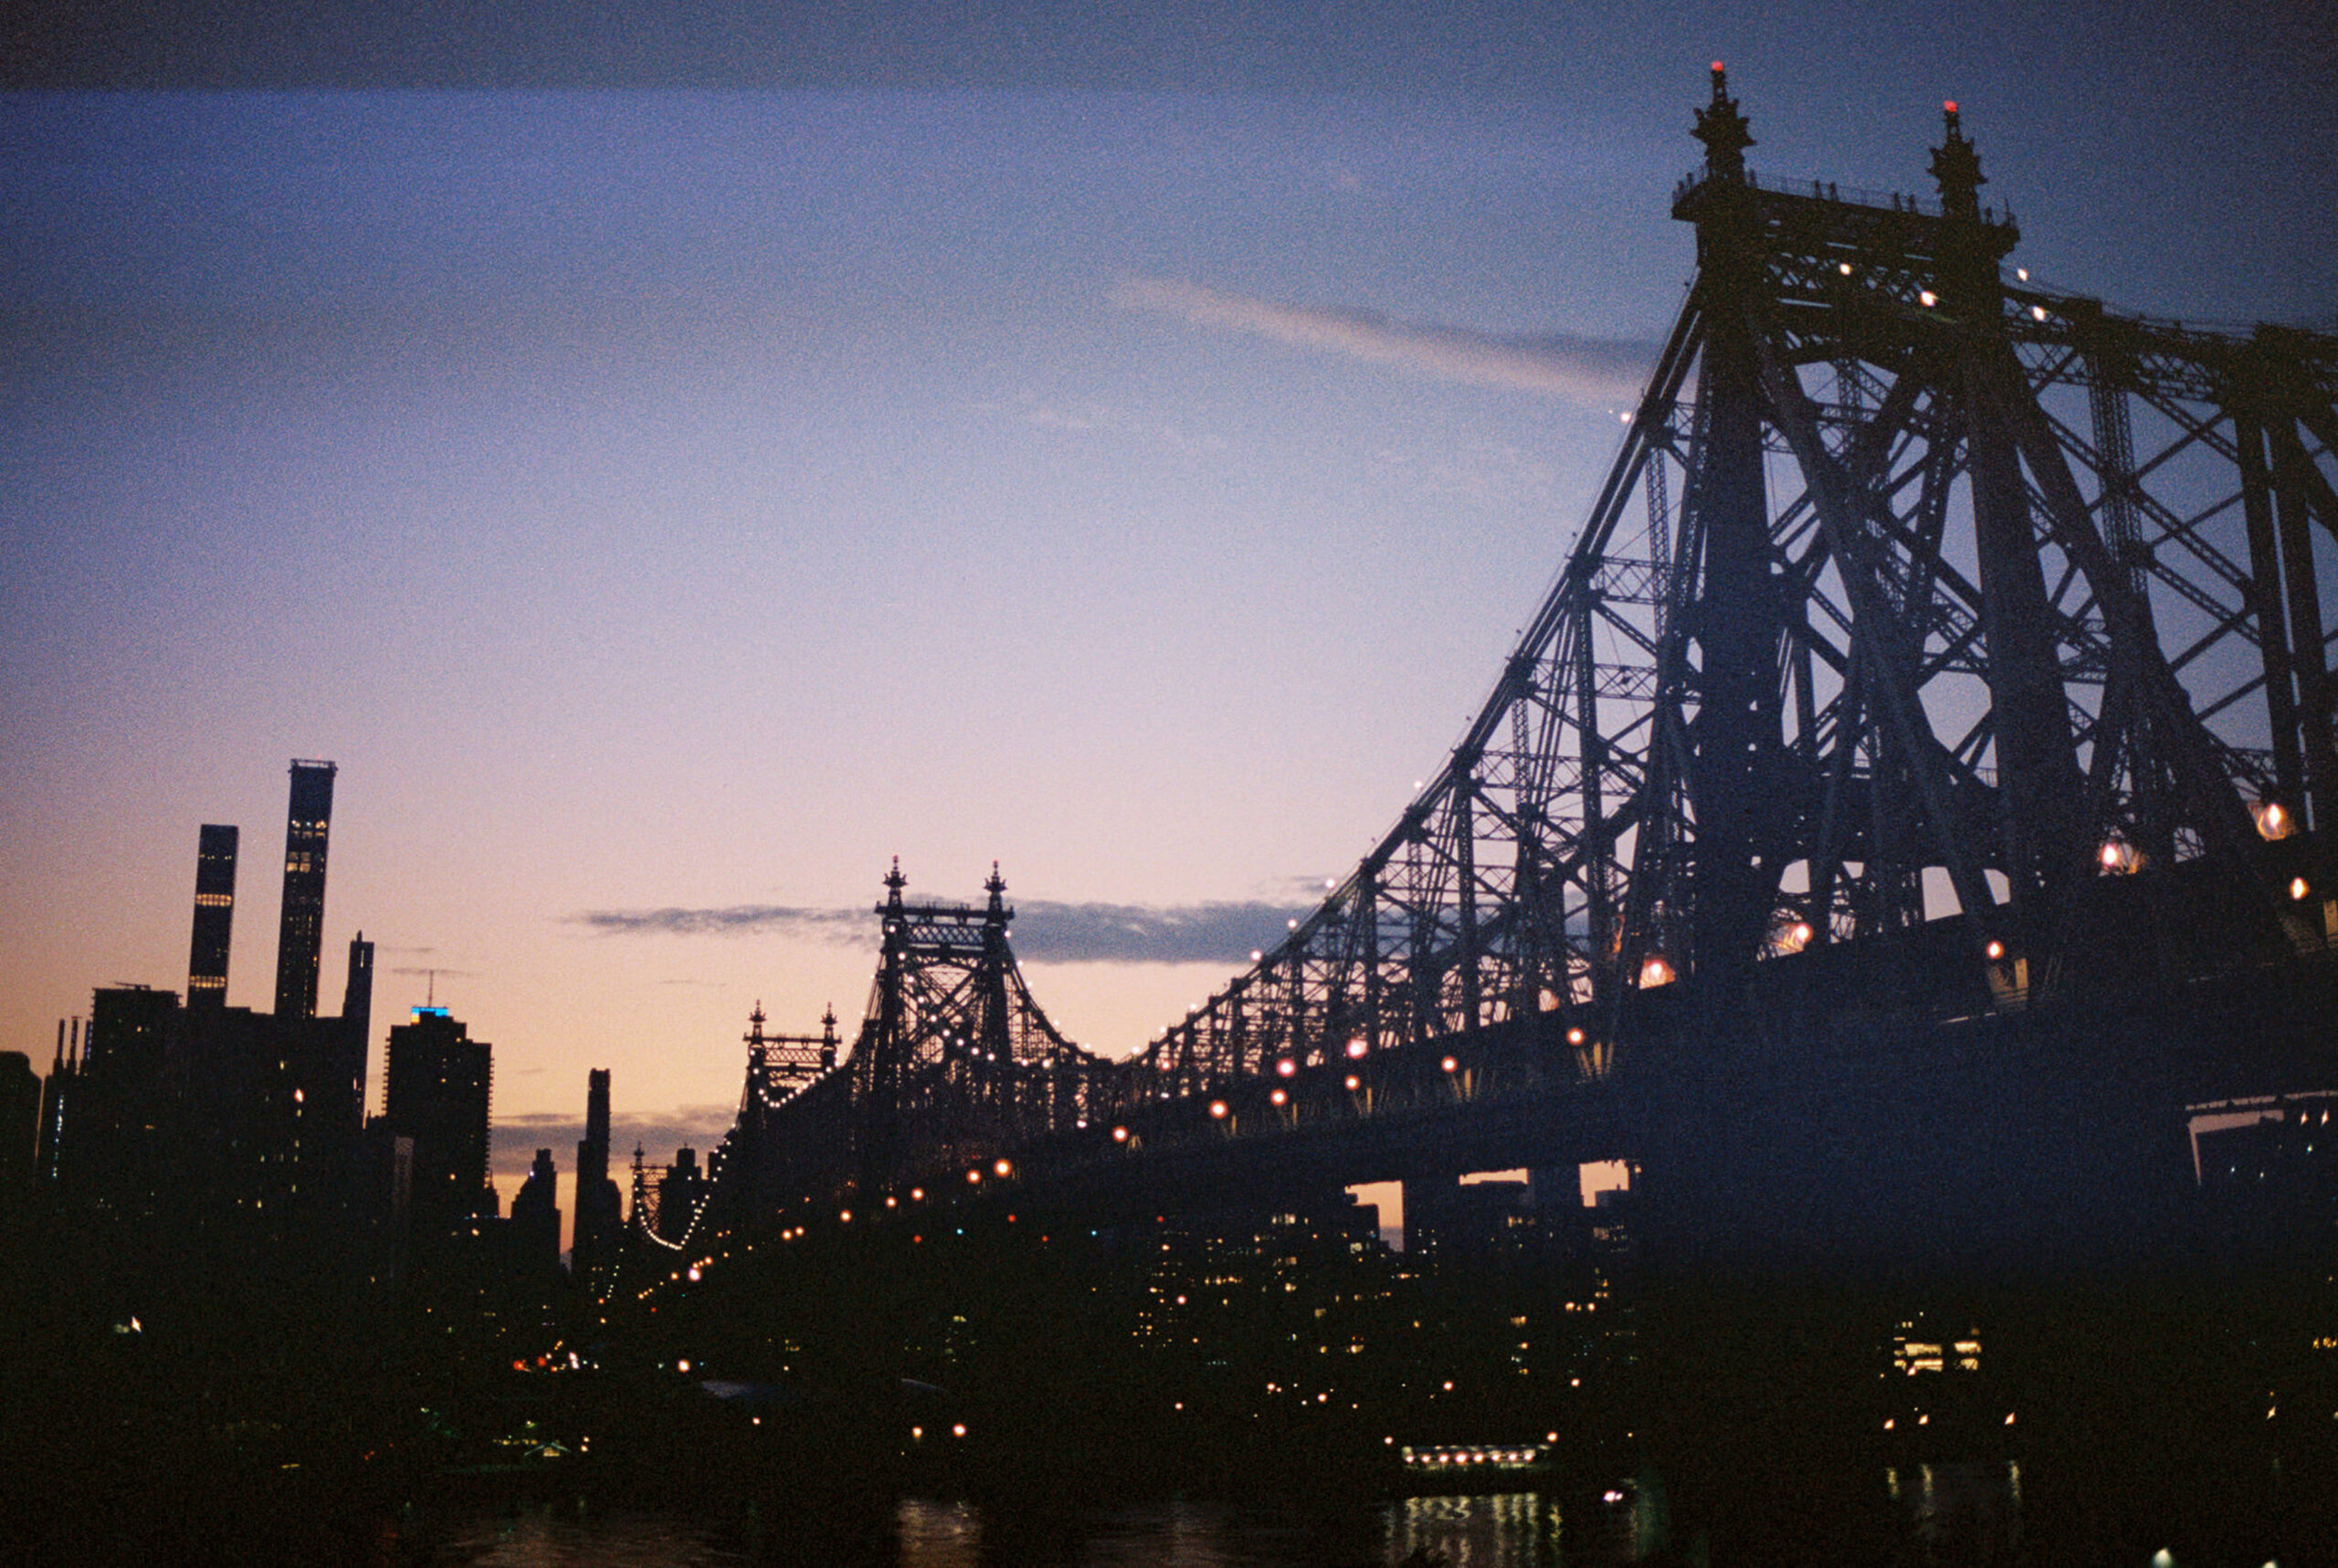 Sunset image of the Brooklyn Bridge.